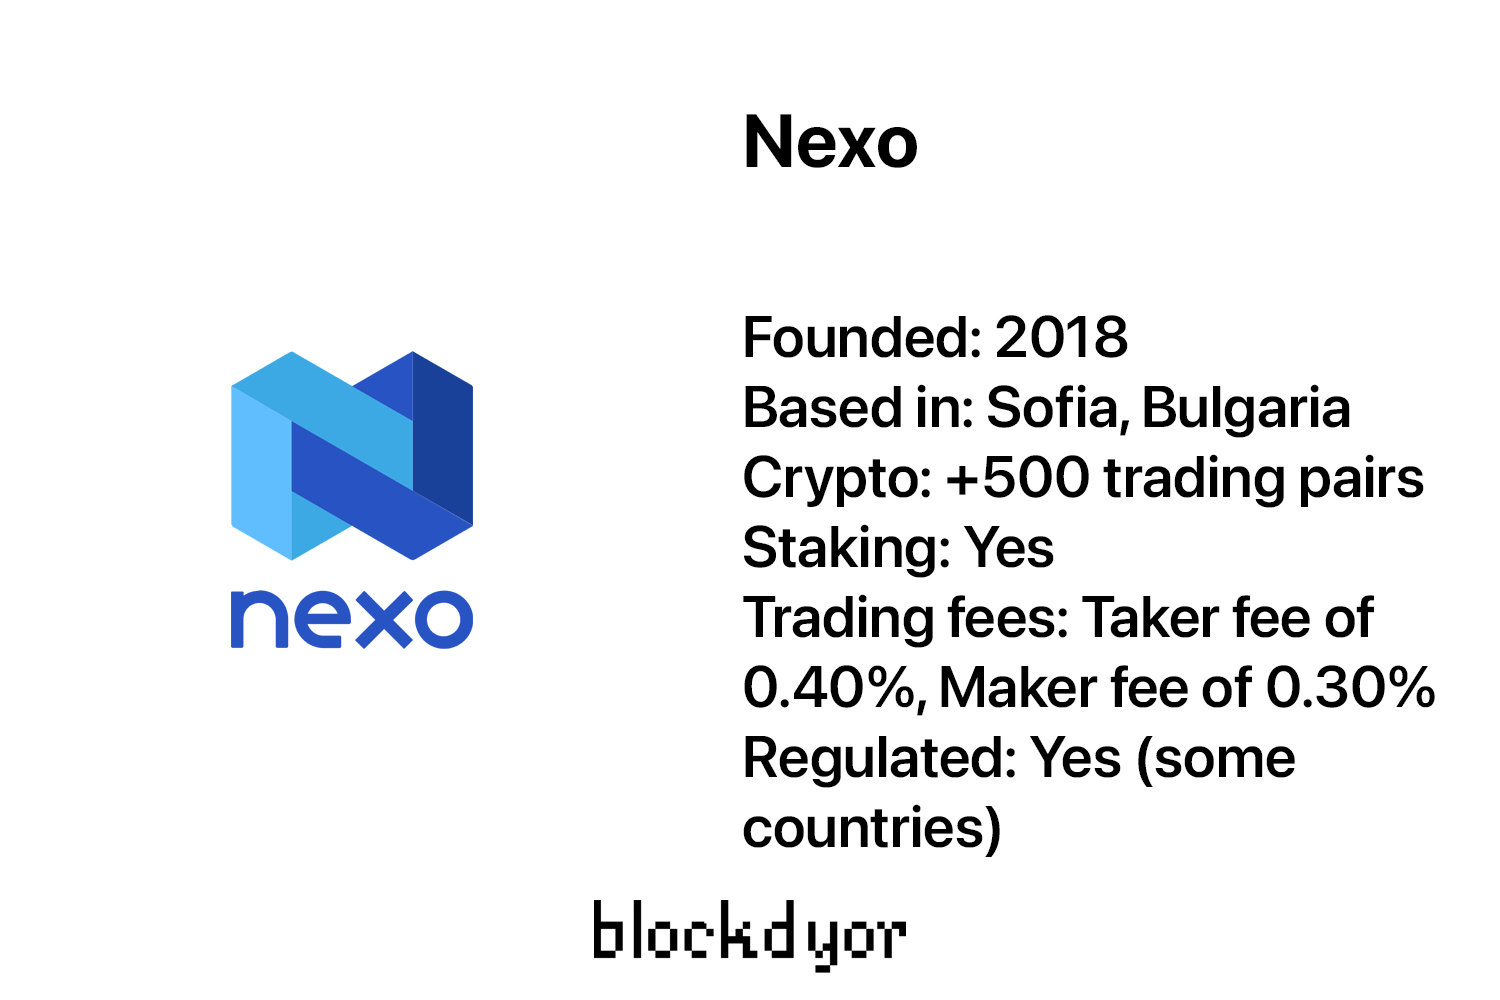 Nexo Overview